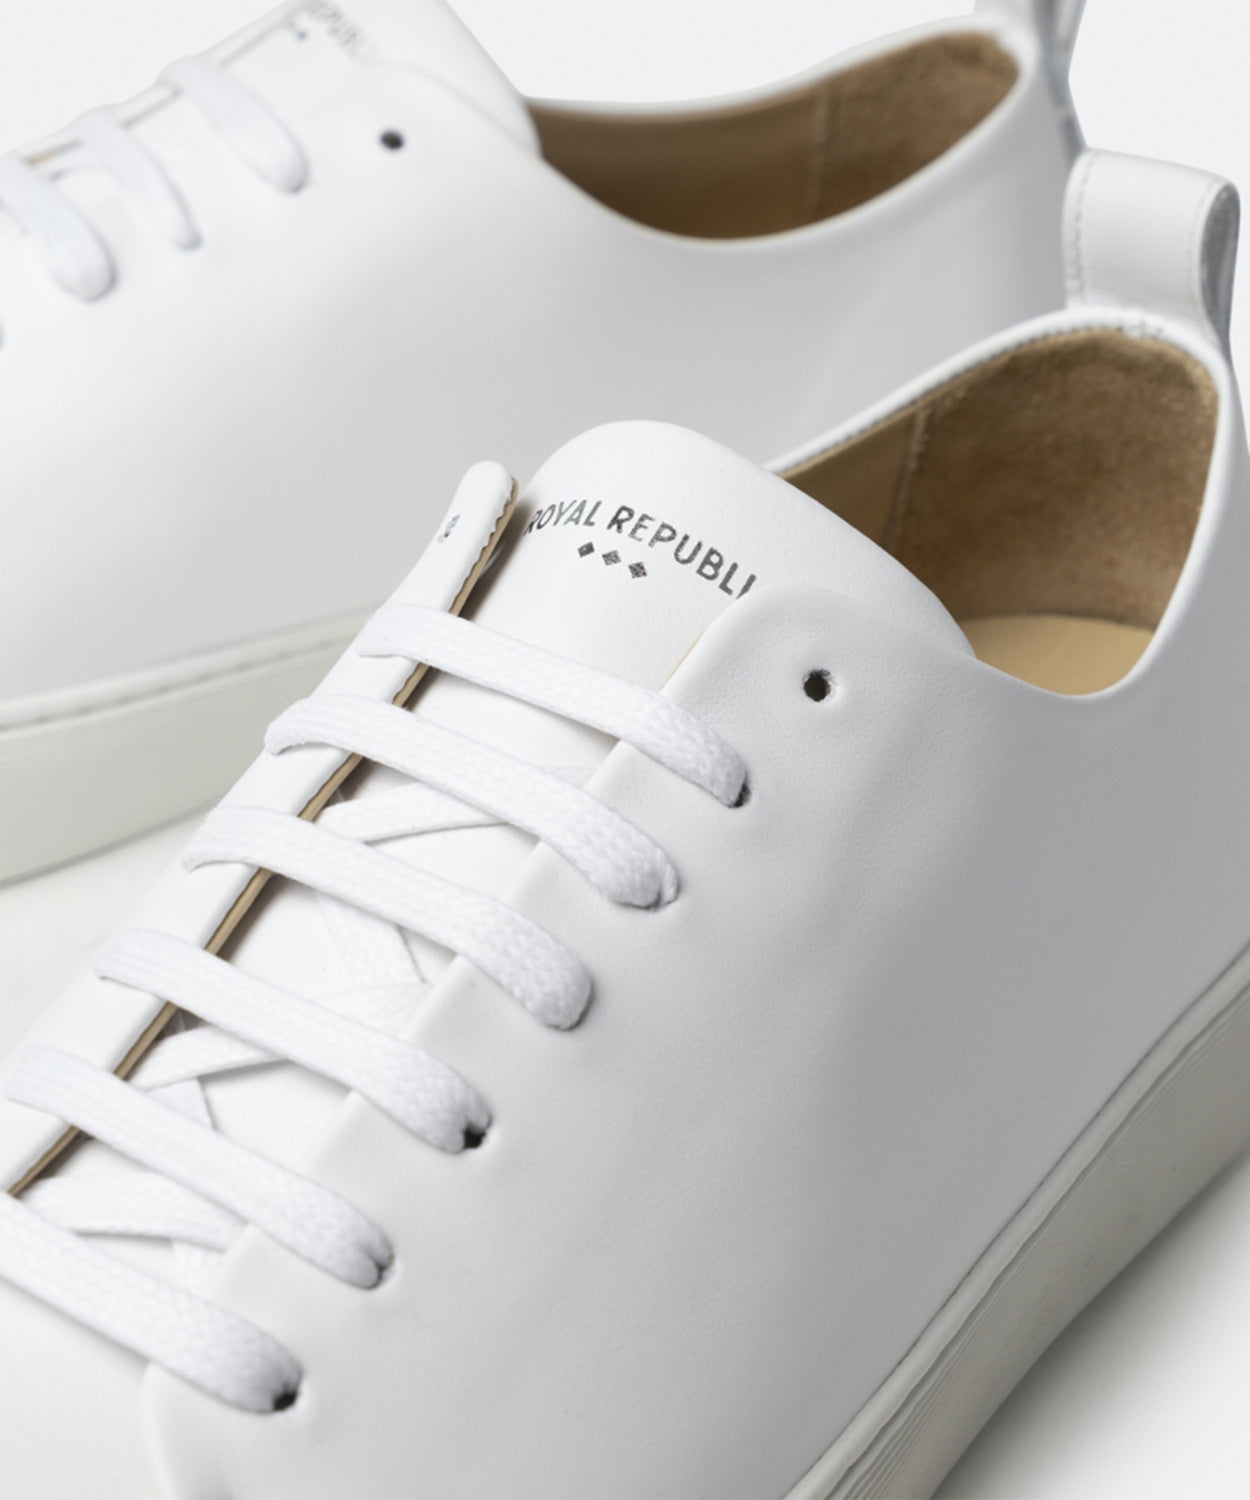 Doric Bound Sneaker | White